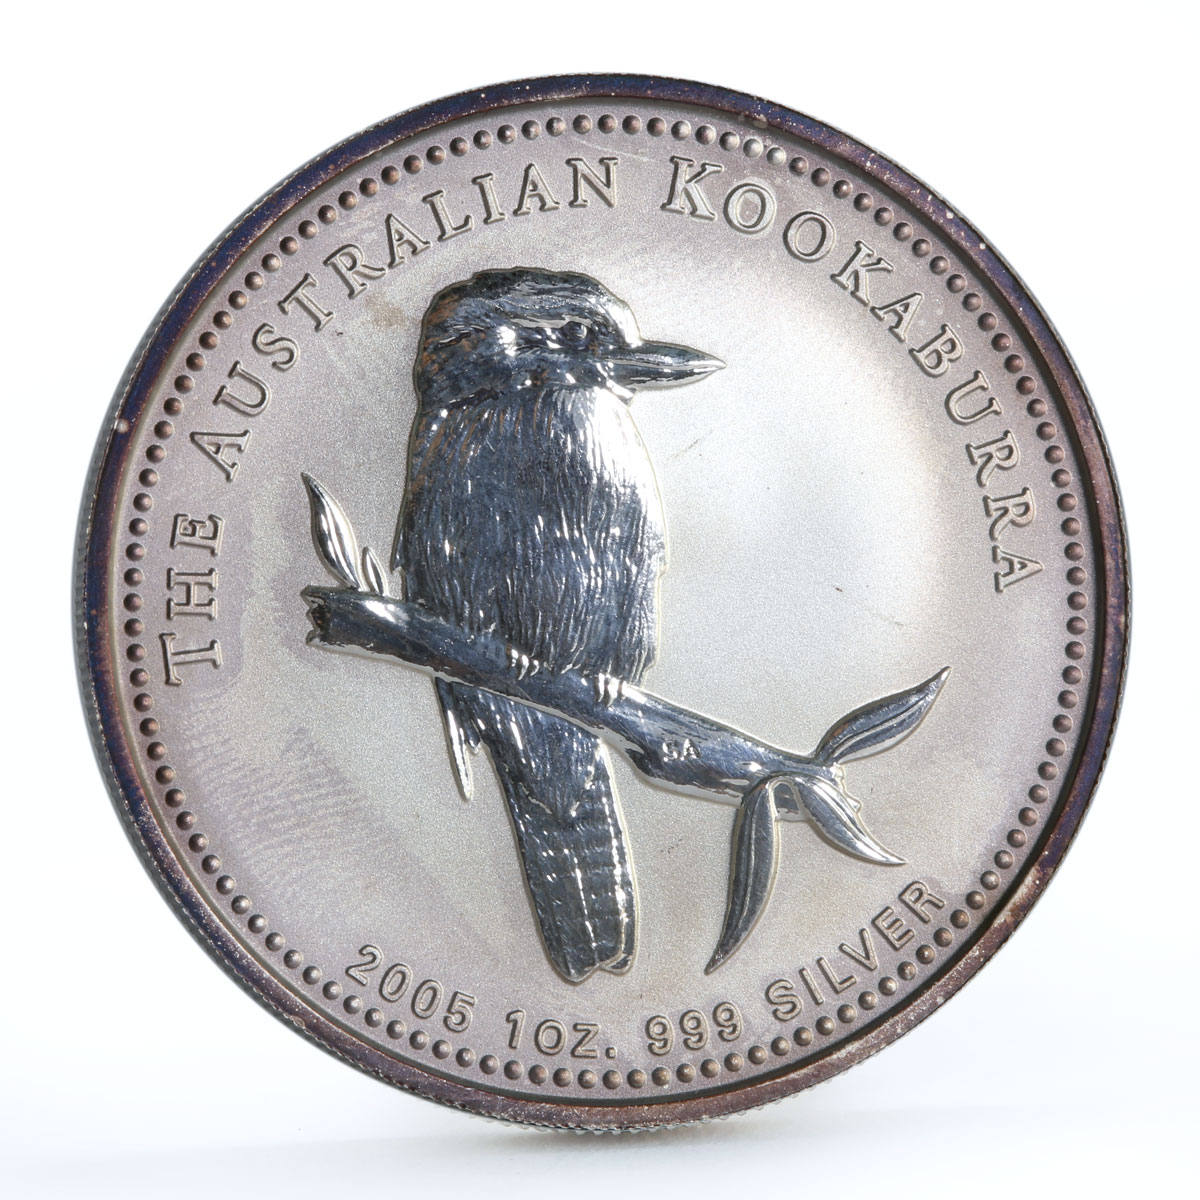 Australia 1 dollar A Gift For Baby Girl Kookaburra Bird Fauna silver coin 2005